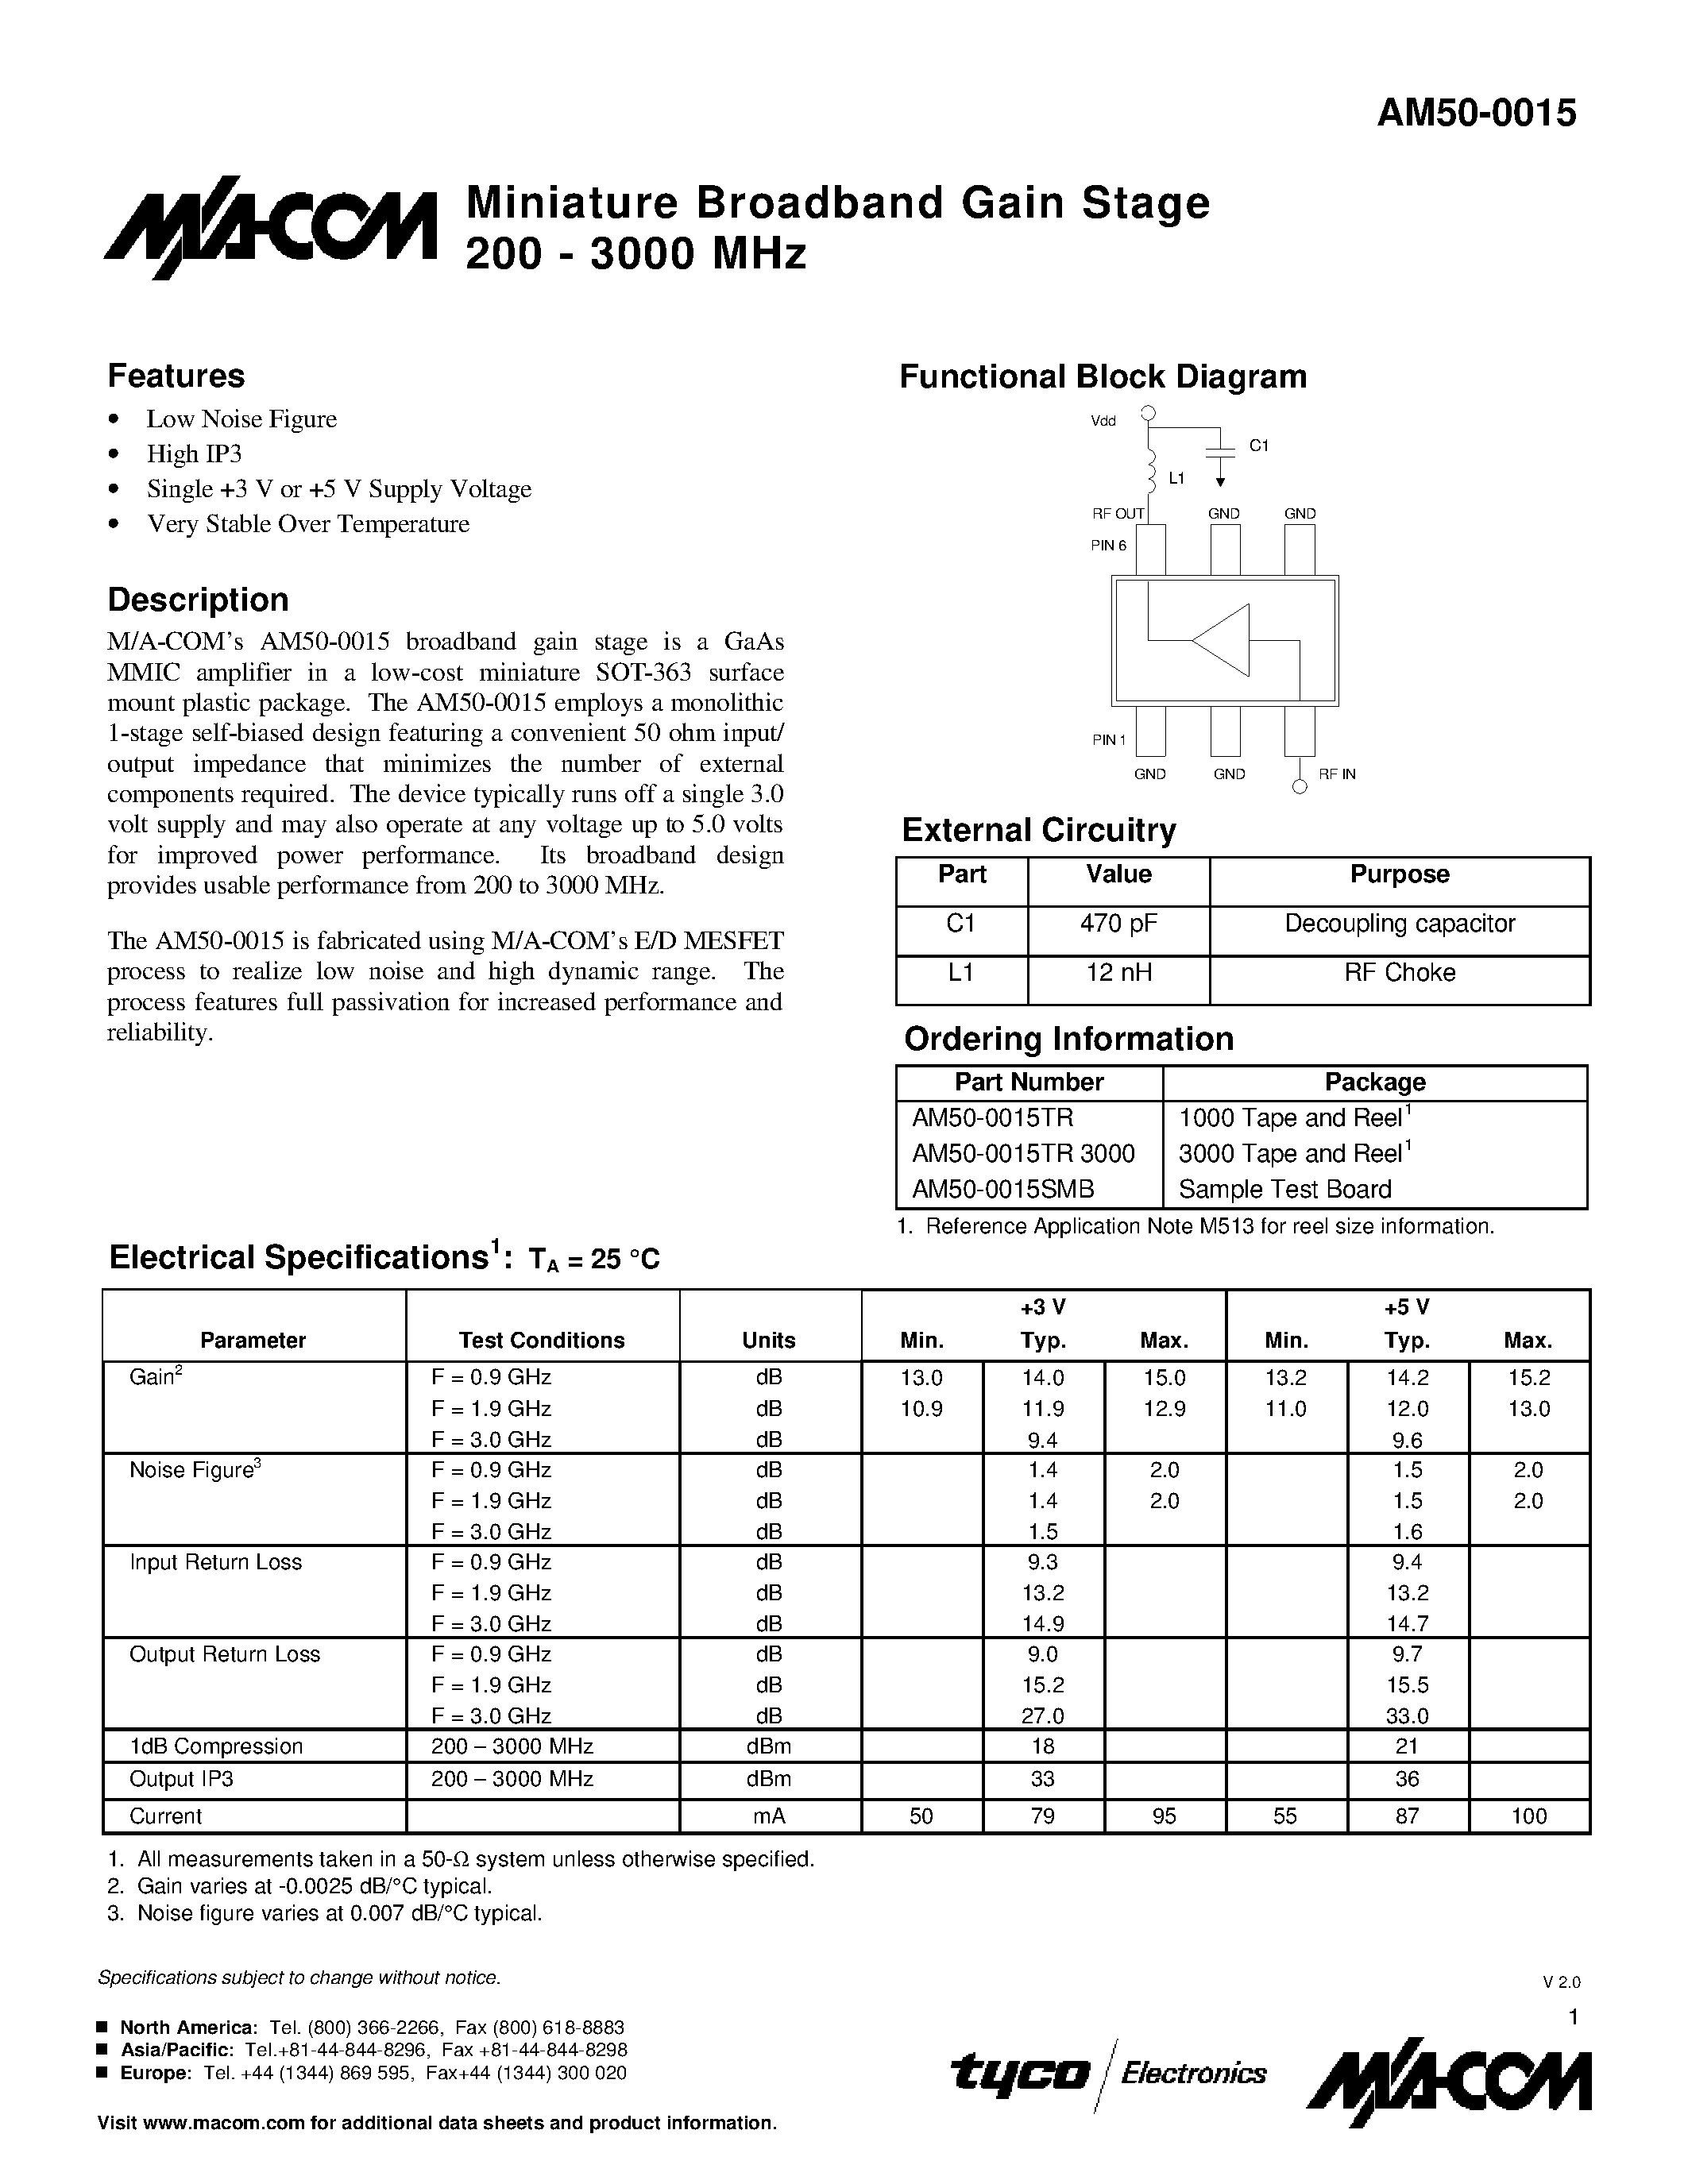 Даташит AM50-0015TR - Miniature Broadband Gain Stage 200 - 3000 MHz страница 1